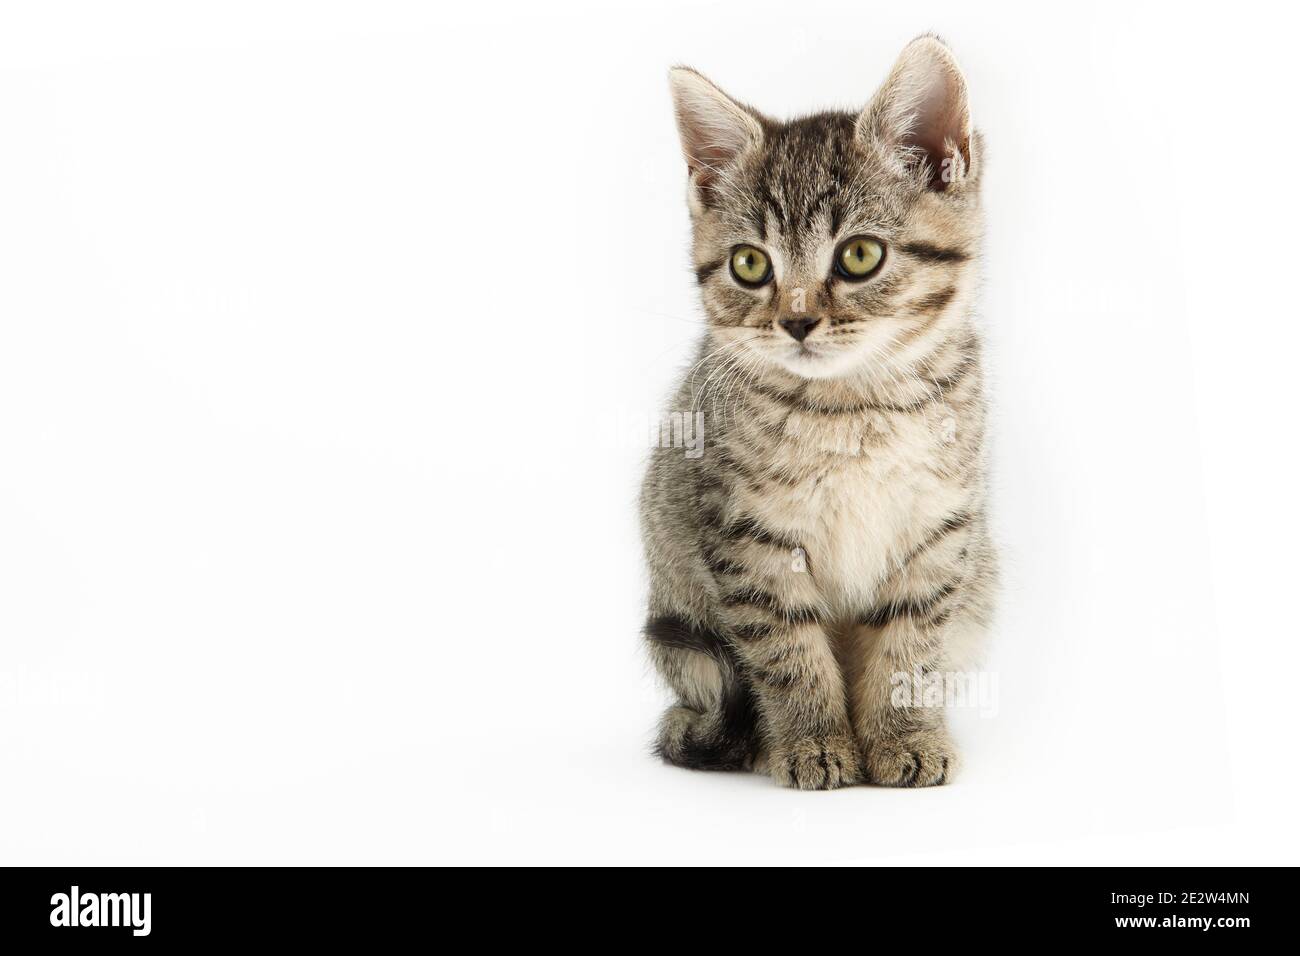 Piccolo tabby (europeo Shorthair) gattino isolato su sfondo bianco. Foto Stock